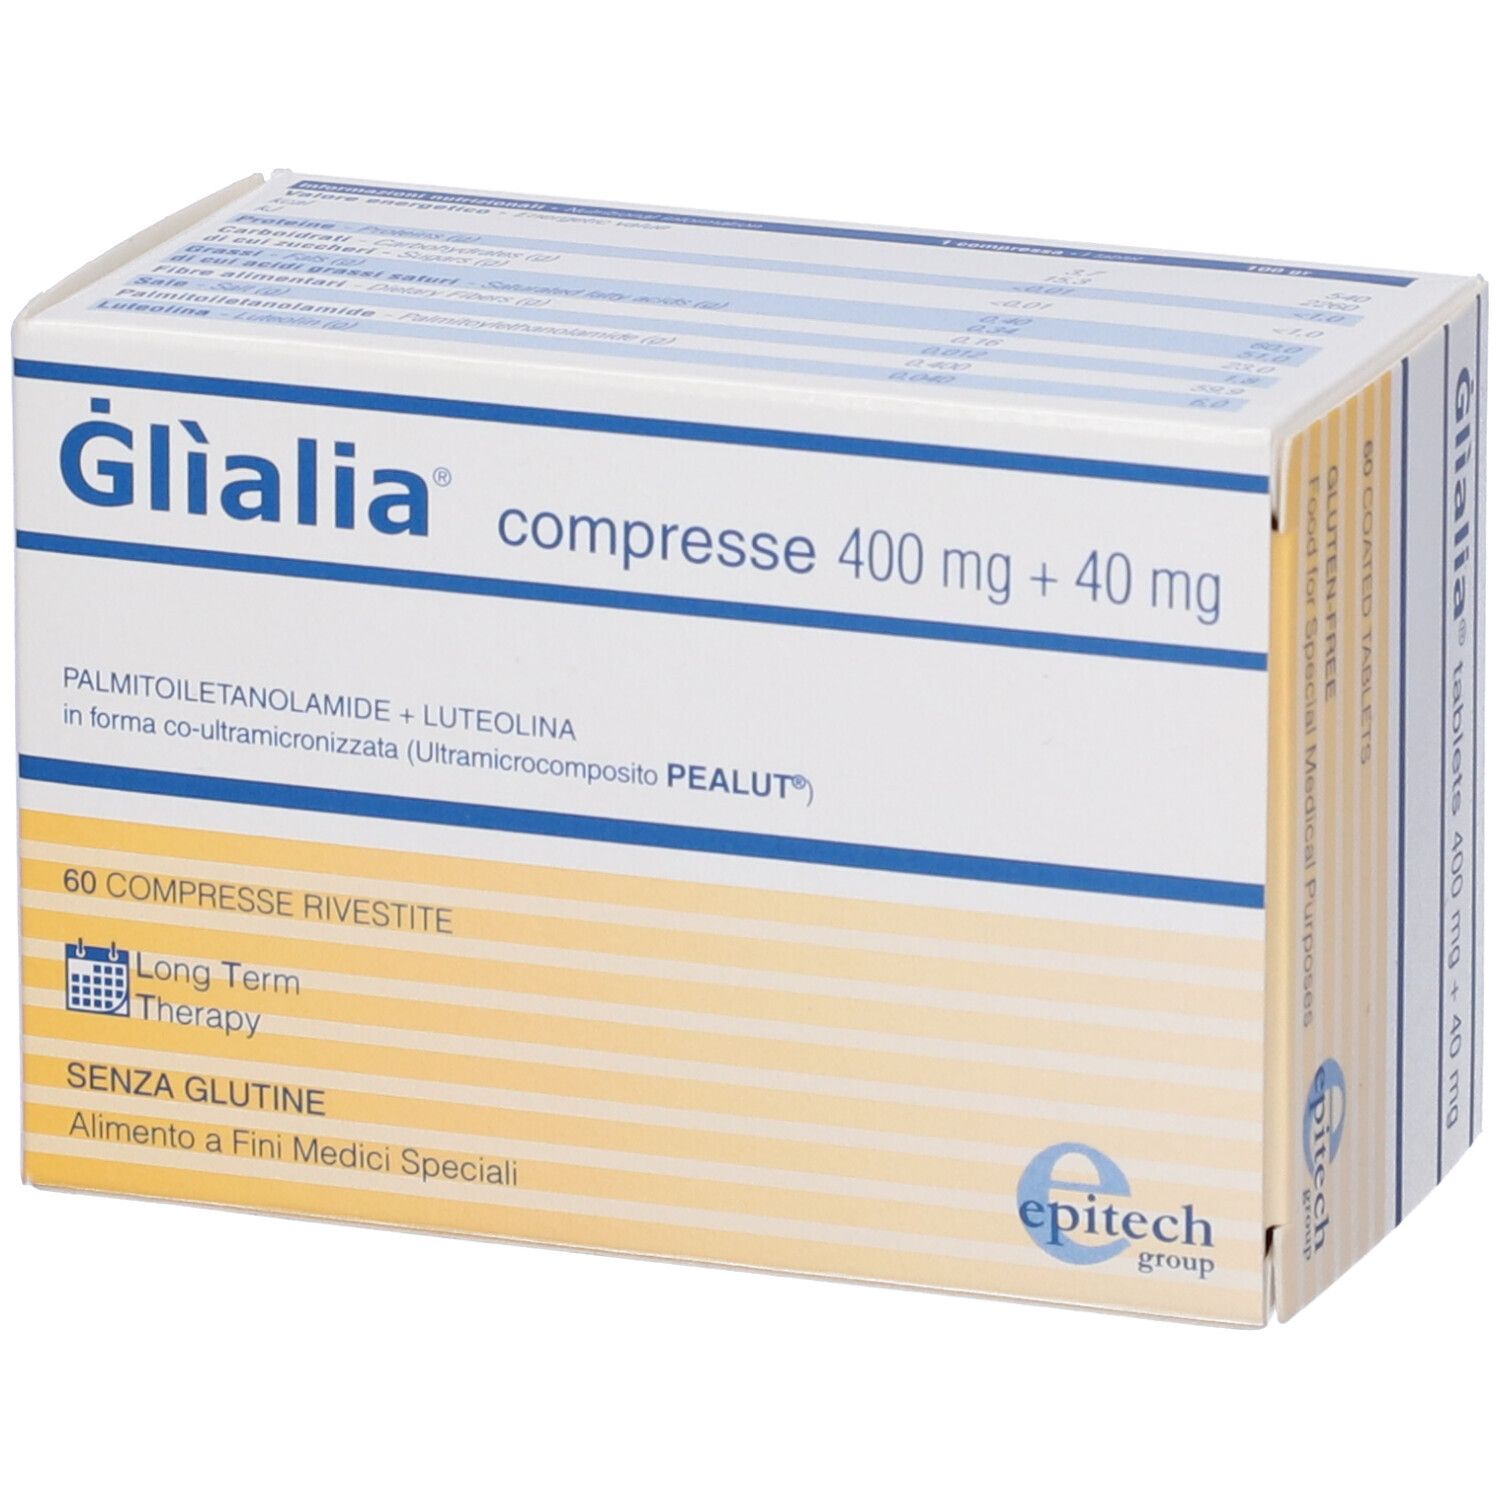 Glialia® Compresse 400 mg + 40 mg